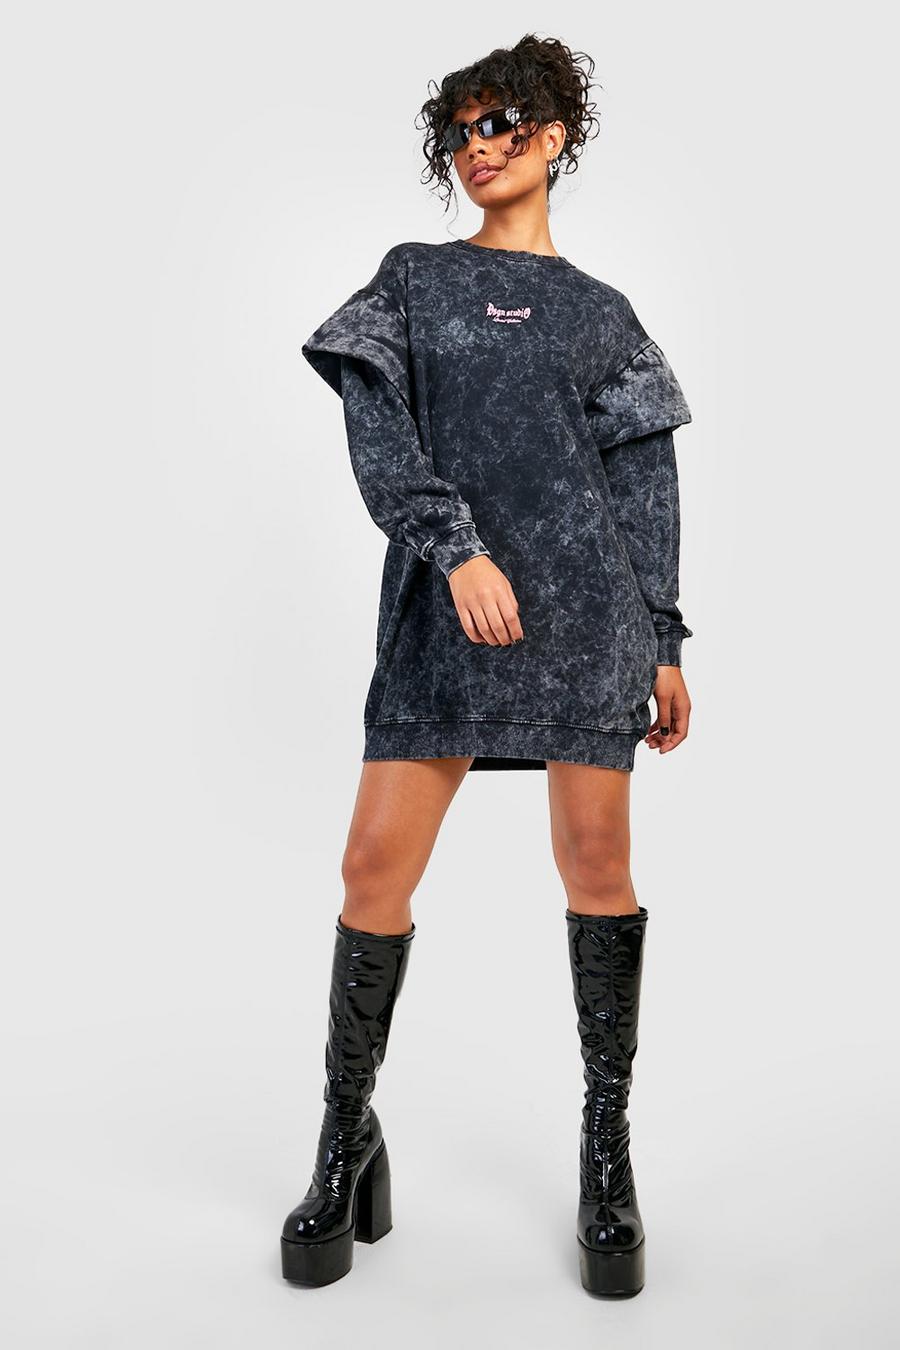 https://media.boohoo.com/i/boohoo/gzz32404_black_xl/female-black-acid-wash-oversized-graphic-sweatshirt-dress/?w=900&qlt=default&fmt.jp2.qlt=70&fmt=auto&sm=fit